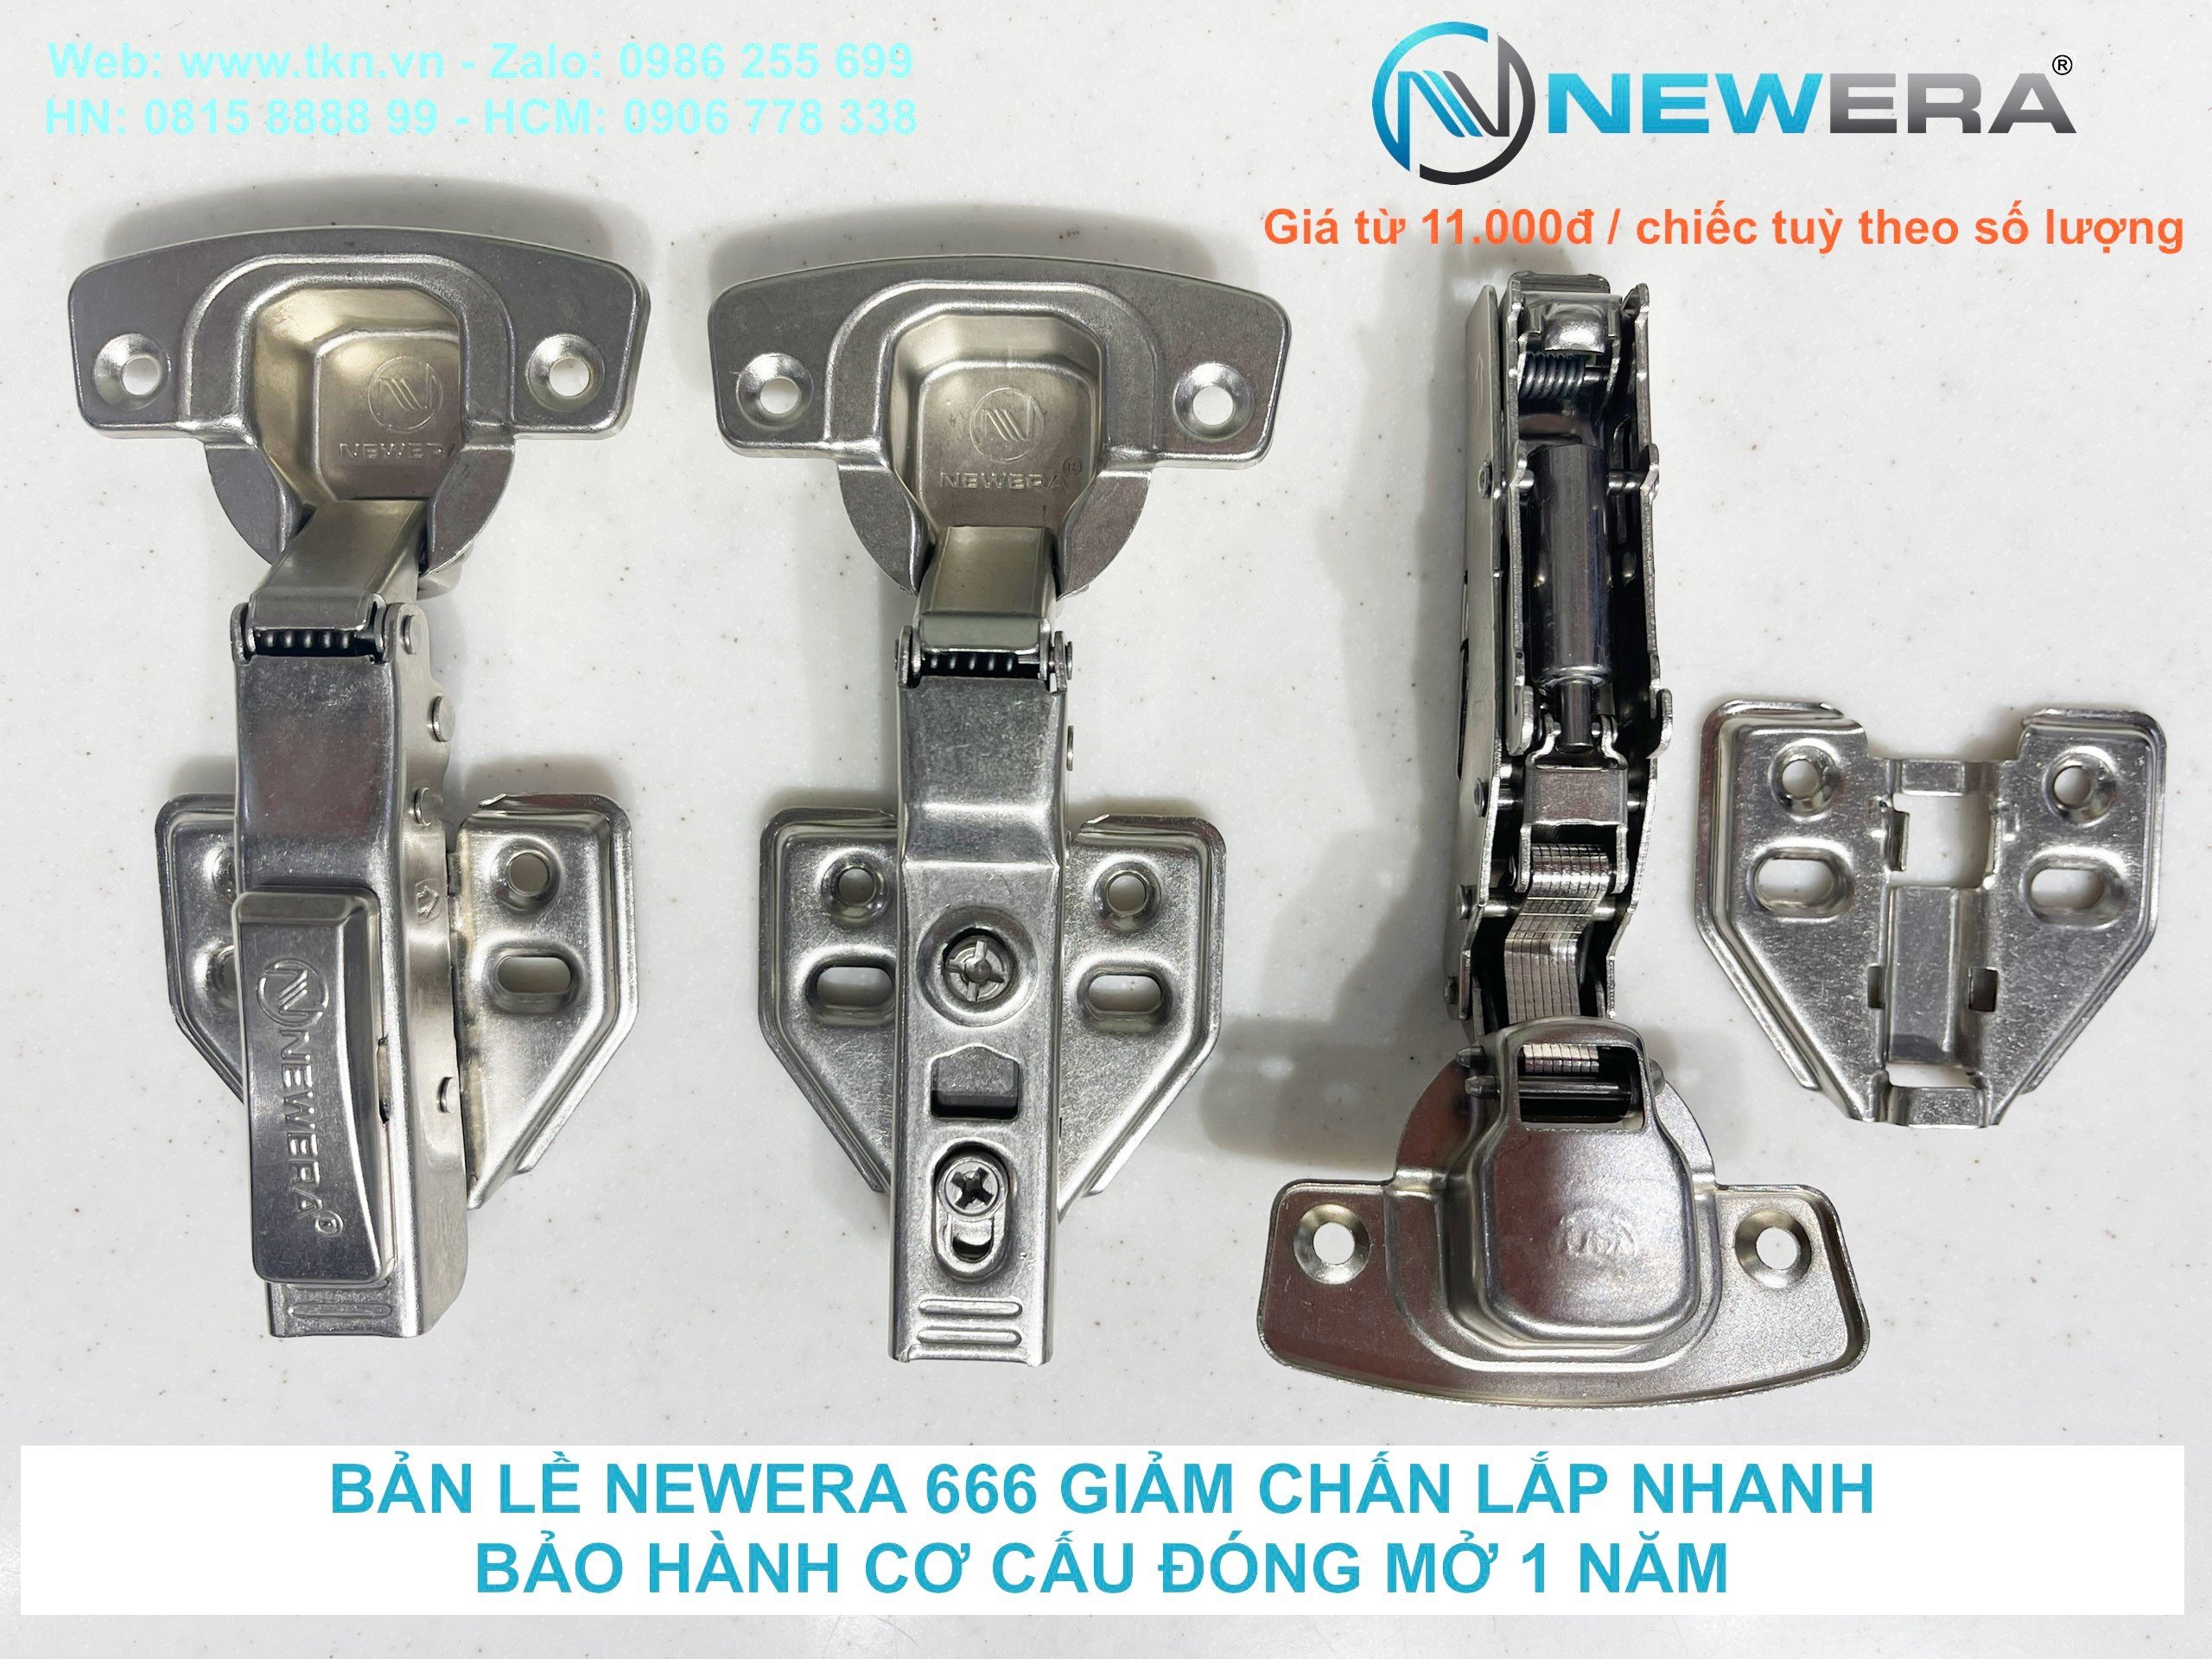 Ban le NewEra 666 giam chan lap nhanh Tan Ky Nguyen